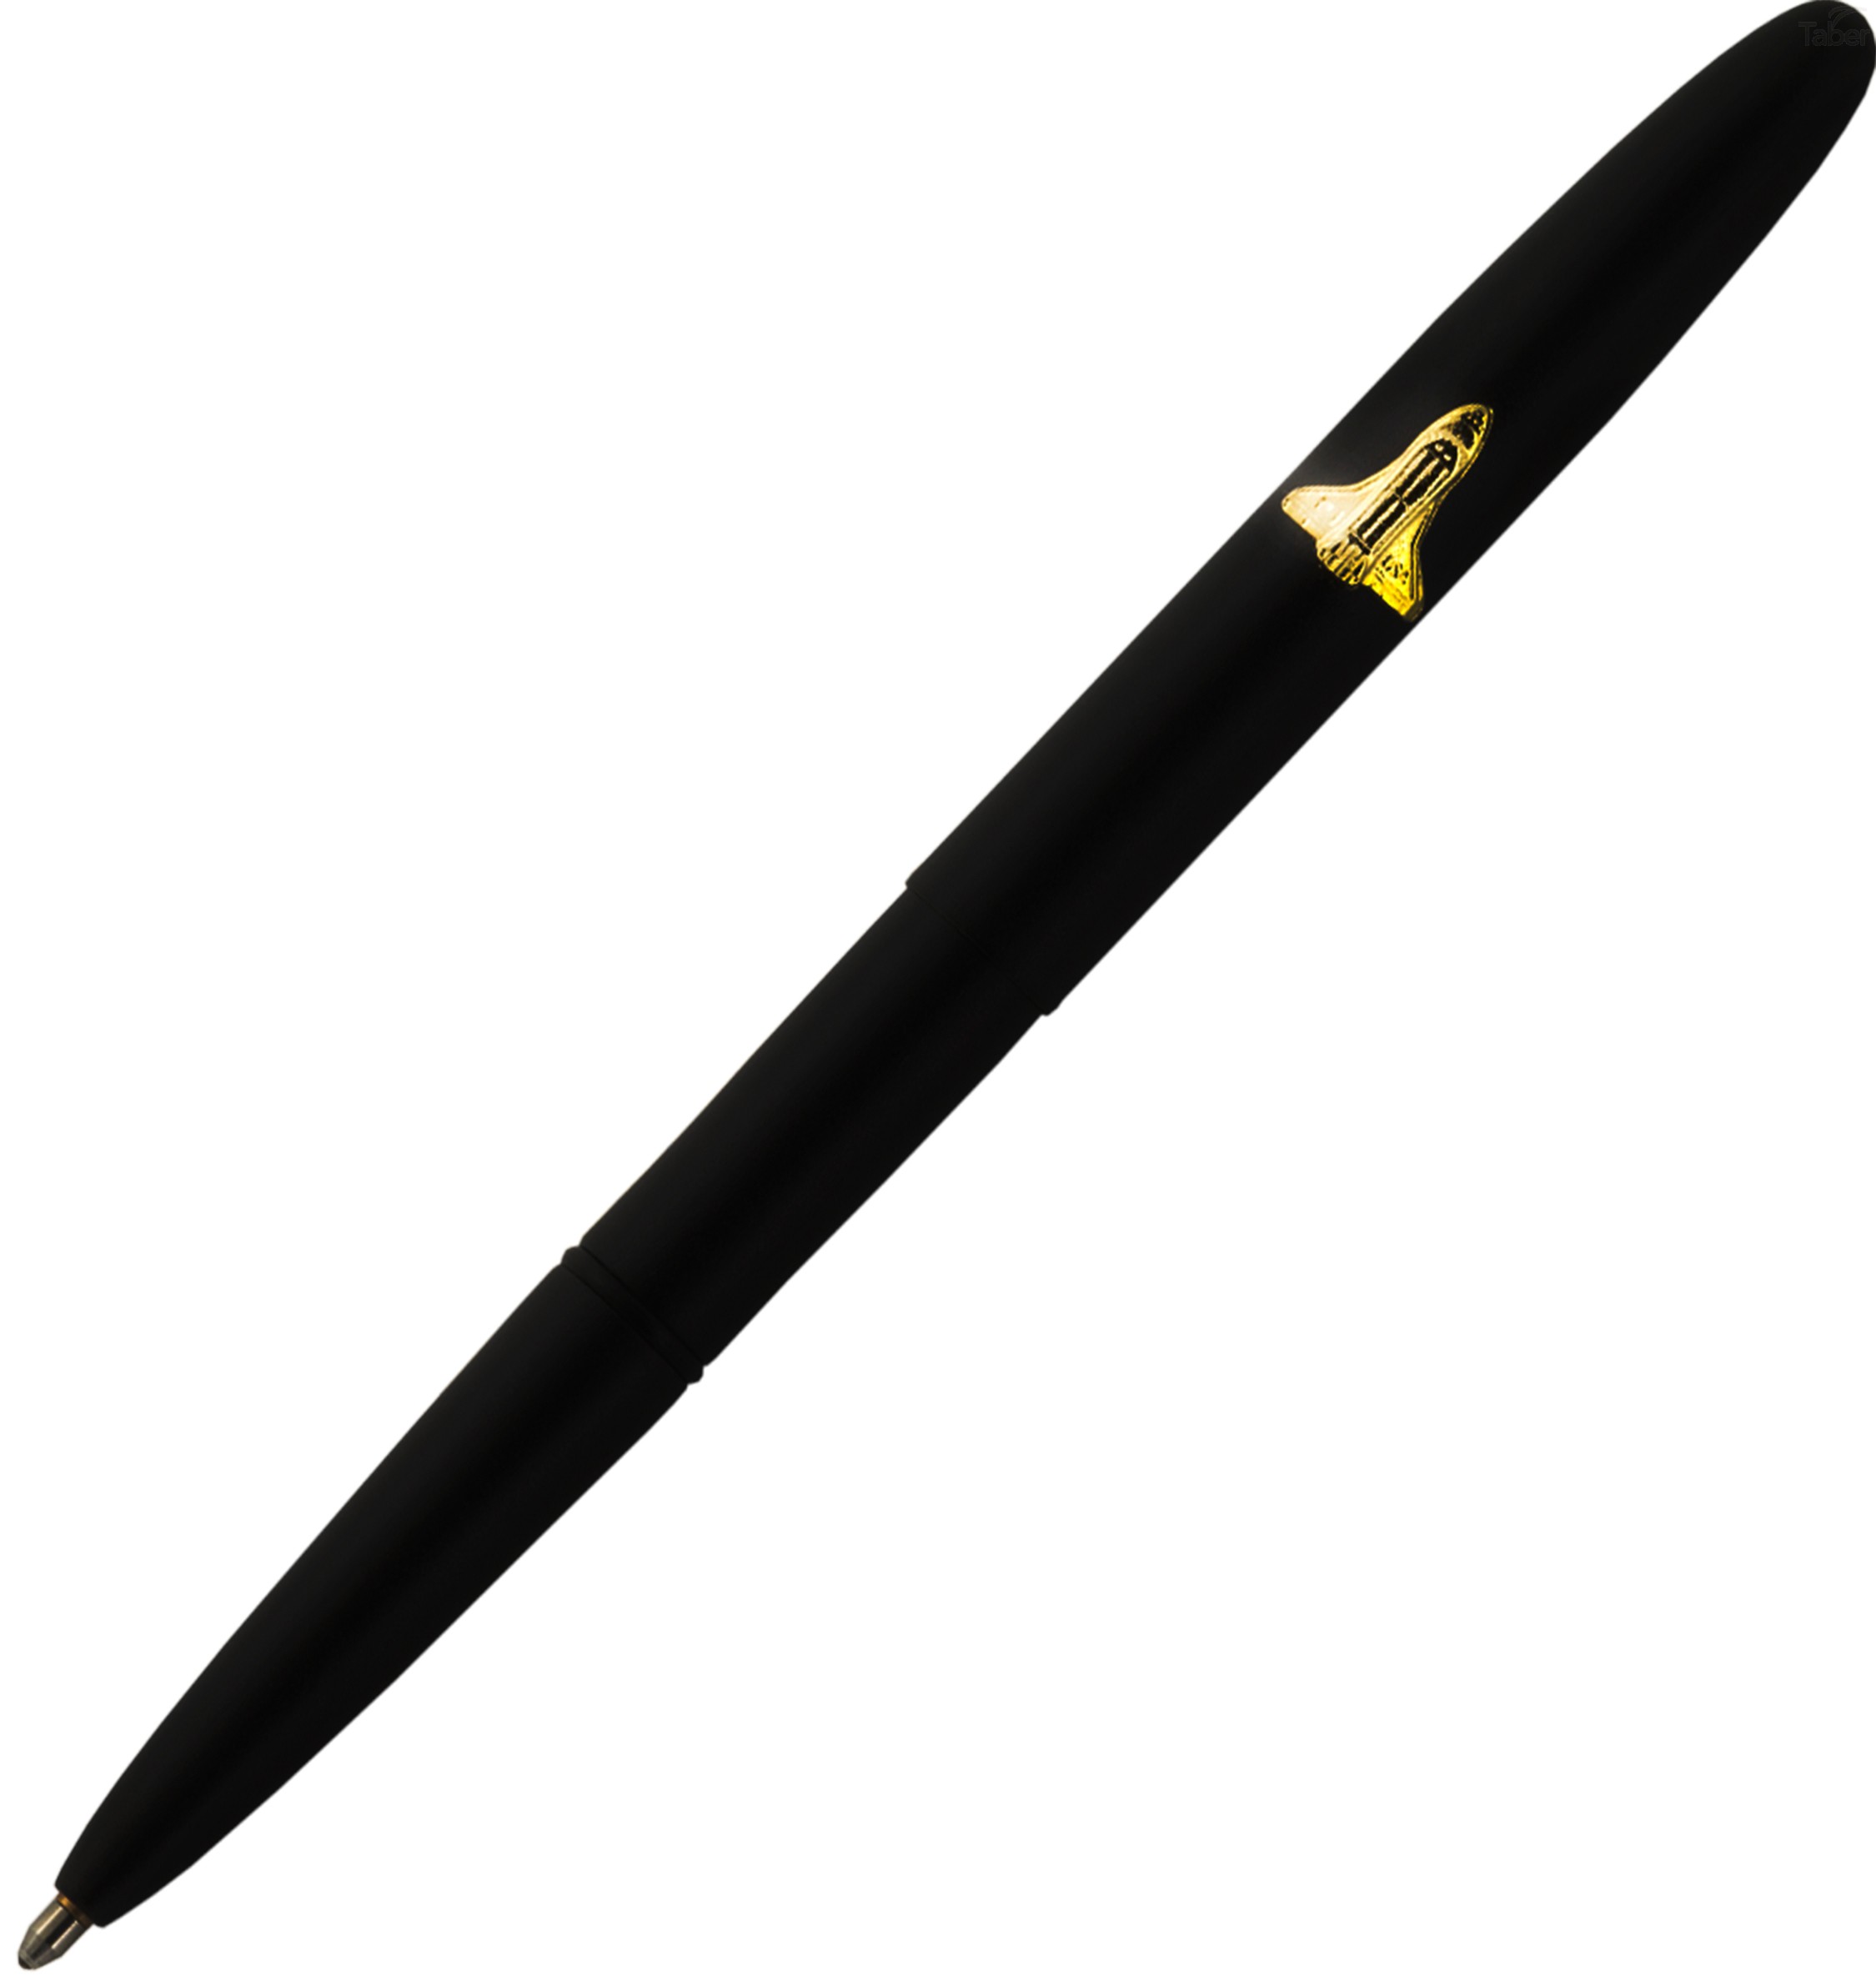 Fisher Bullet Space Pen, Matte Black w/ Emblem